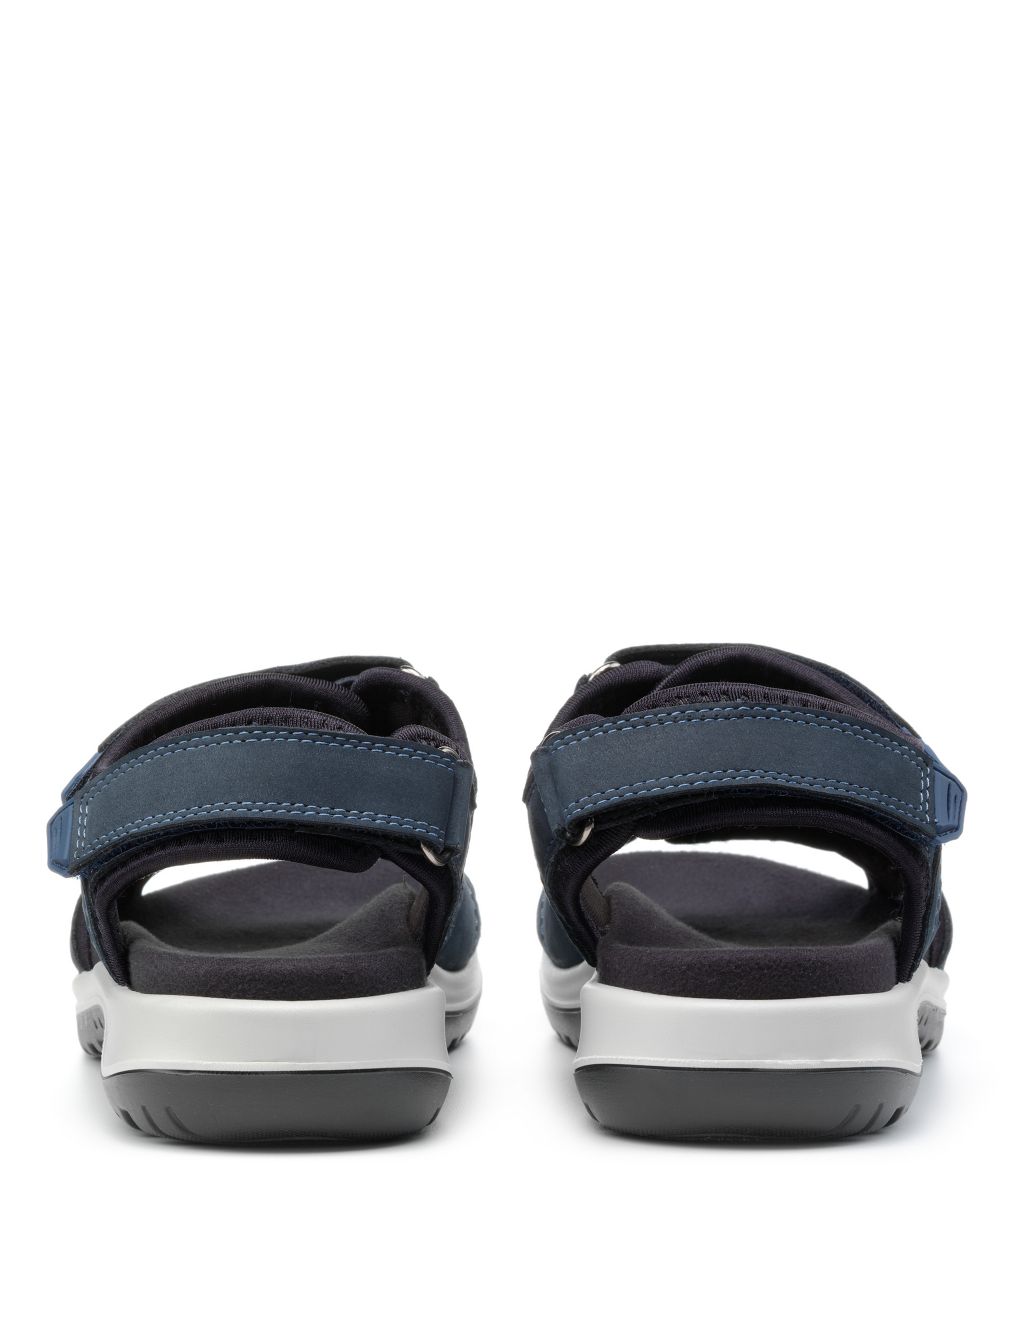 Walk II Wide Fit Leather Riptape Sandals image 4